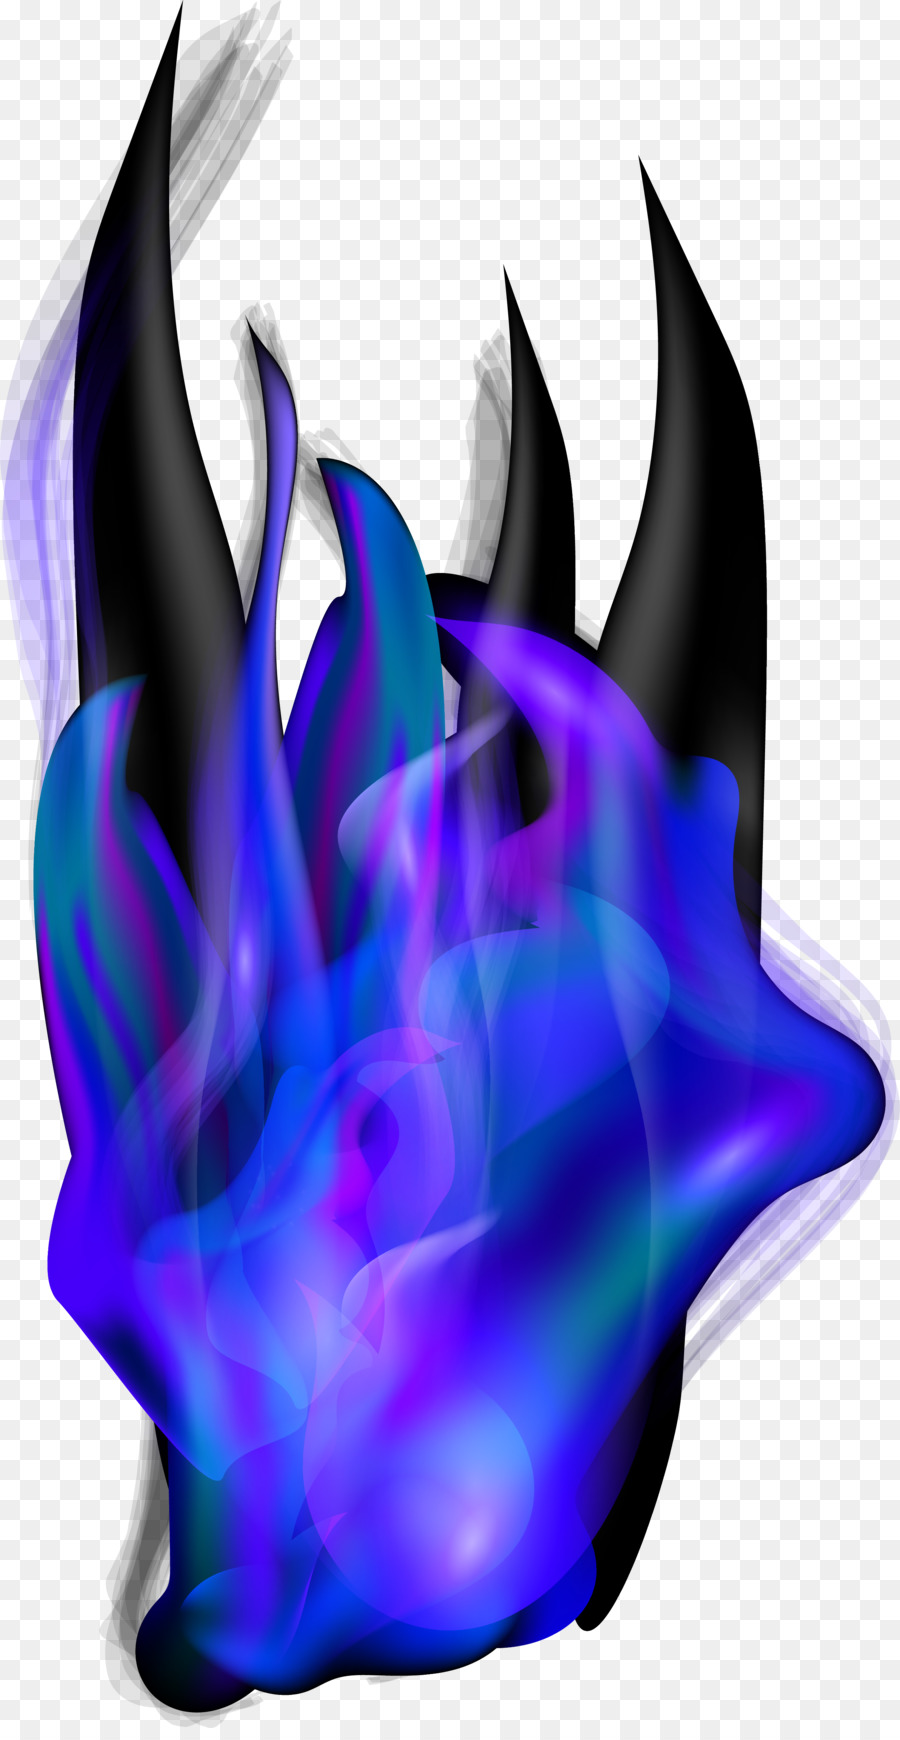 Purple Flame Fire - Purple fresh flames png download - 2501*4801 - Free Transparent Purple png Download.